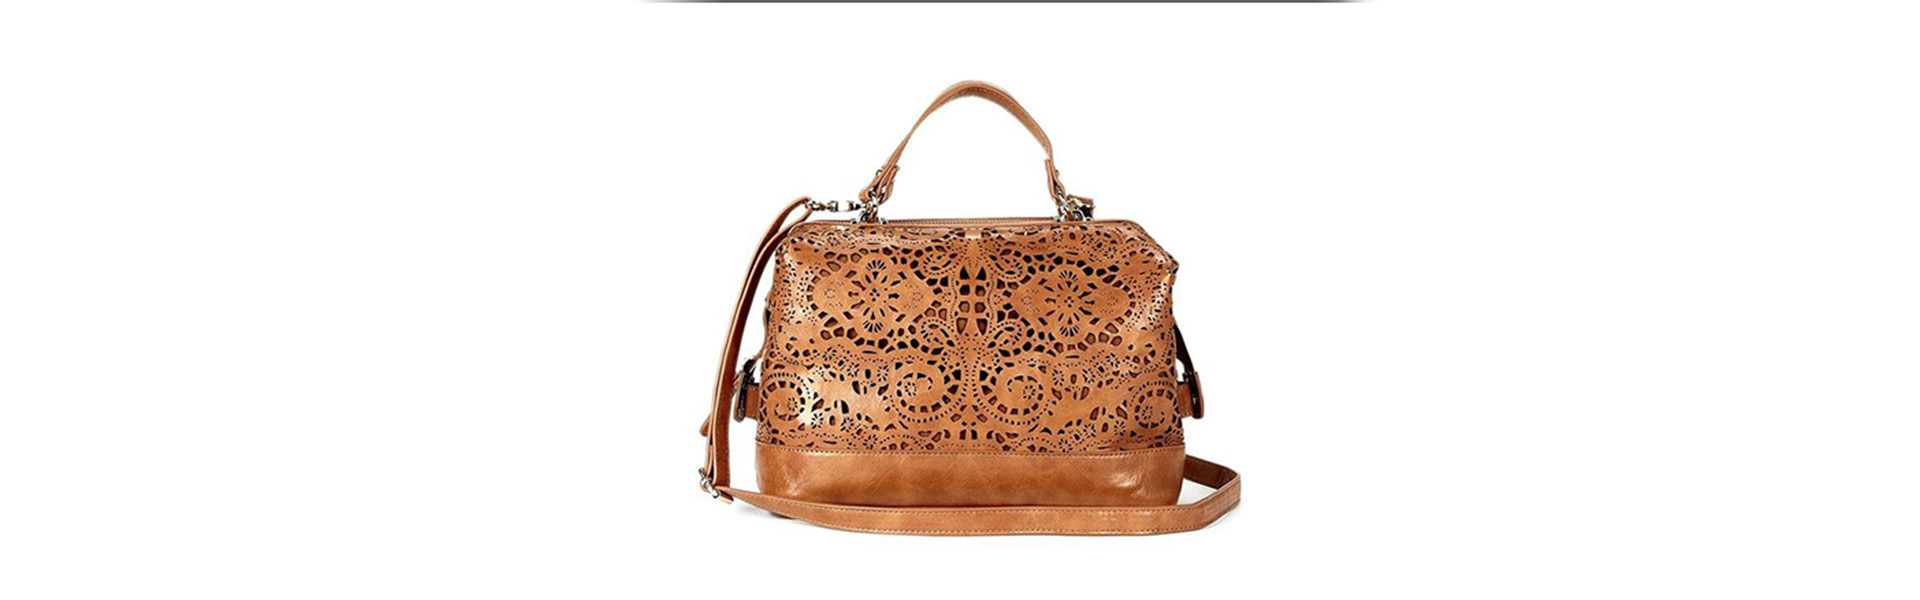 Danier Laser-cut Design Brown Leather Purse | Brown leather purses, Lasercut  design, Leather purses